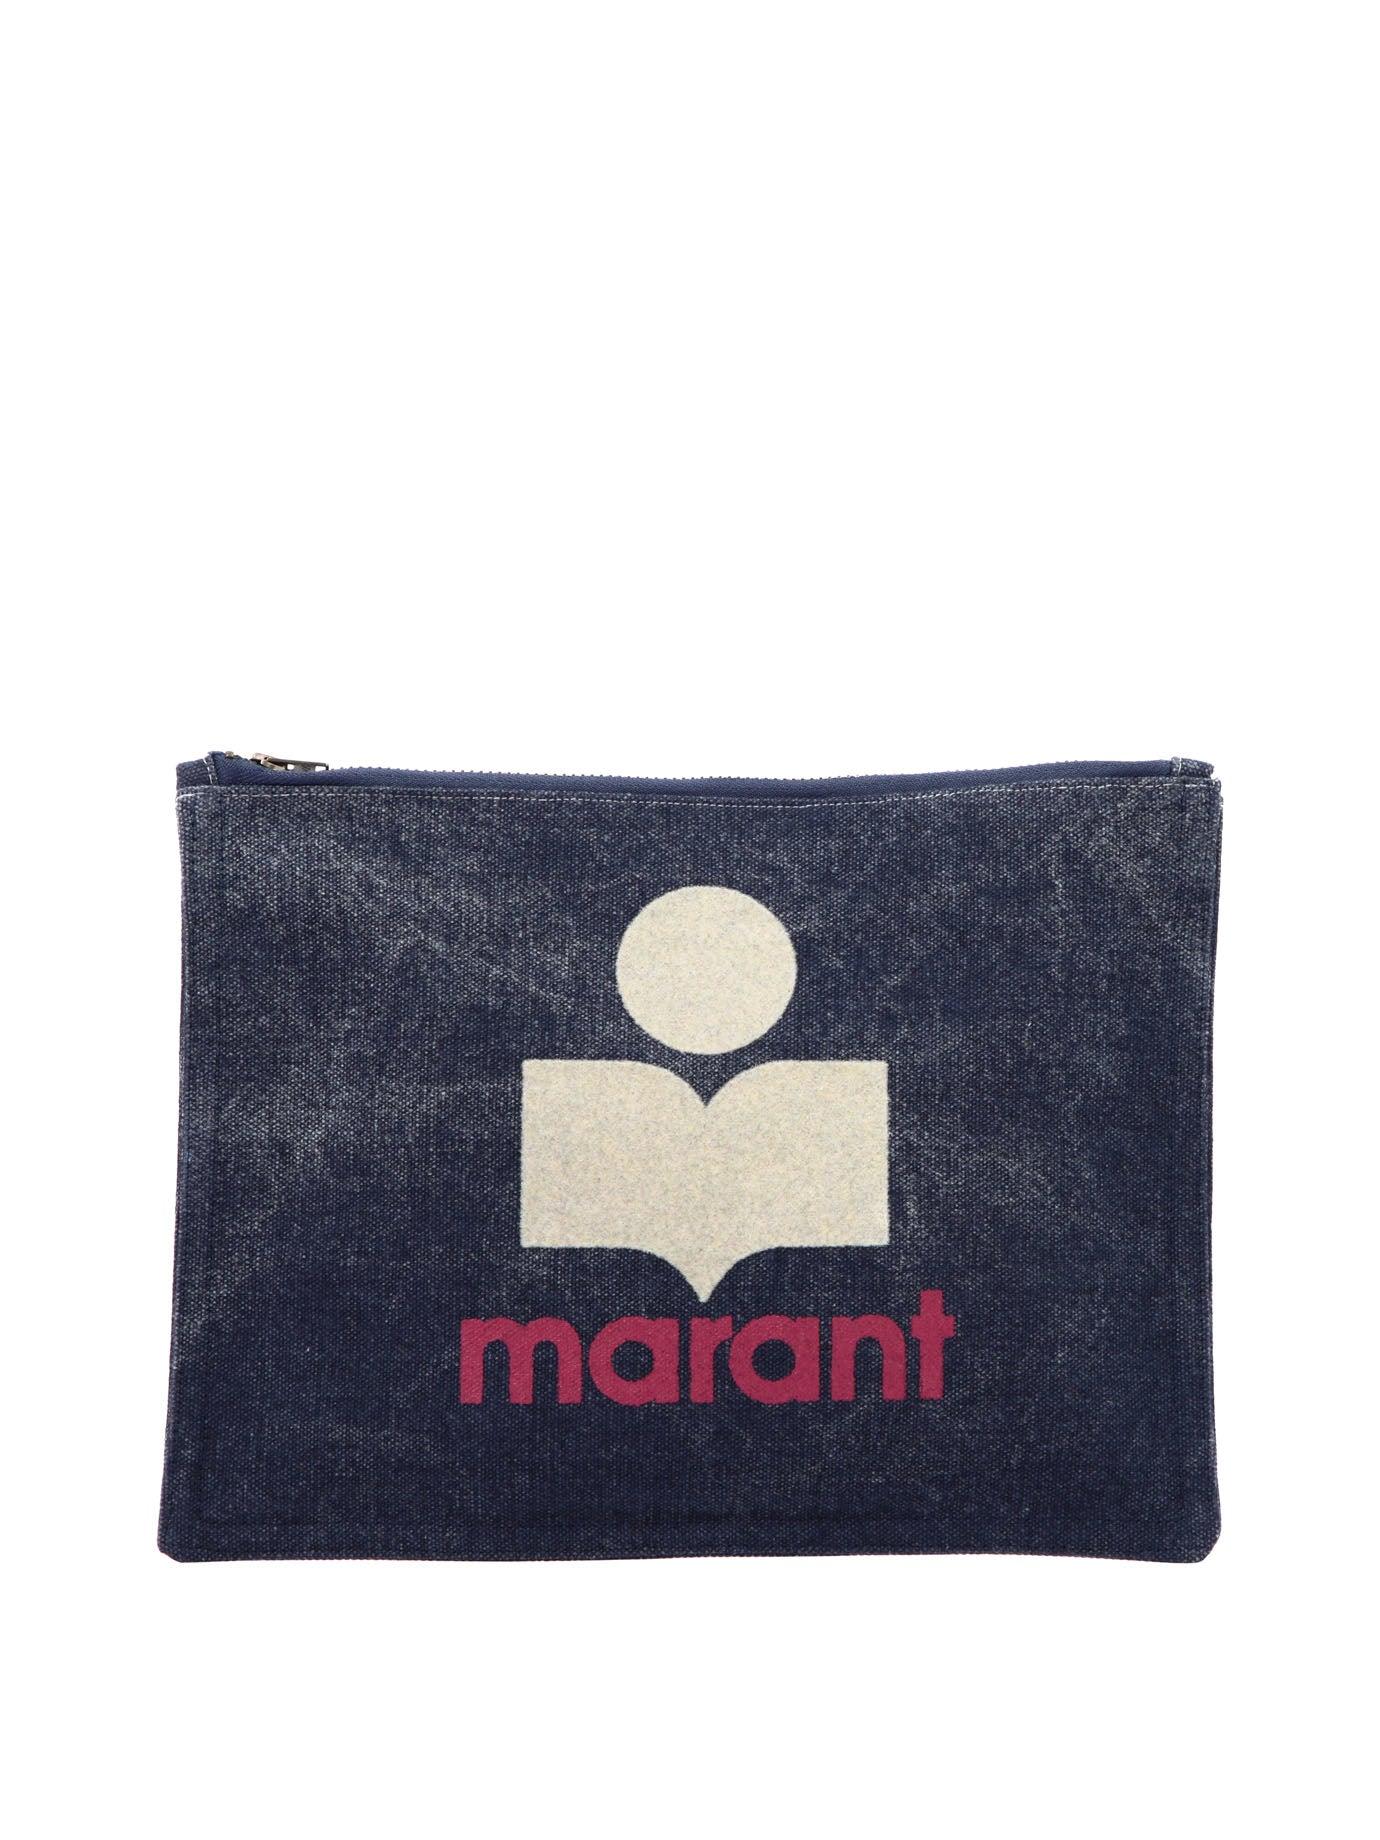 Isabel Marant Logo Printed Zipped Clutch Bag